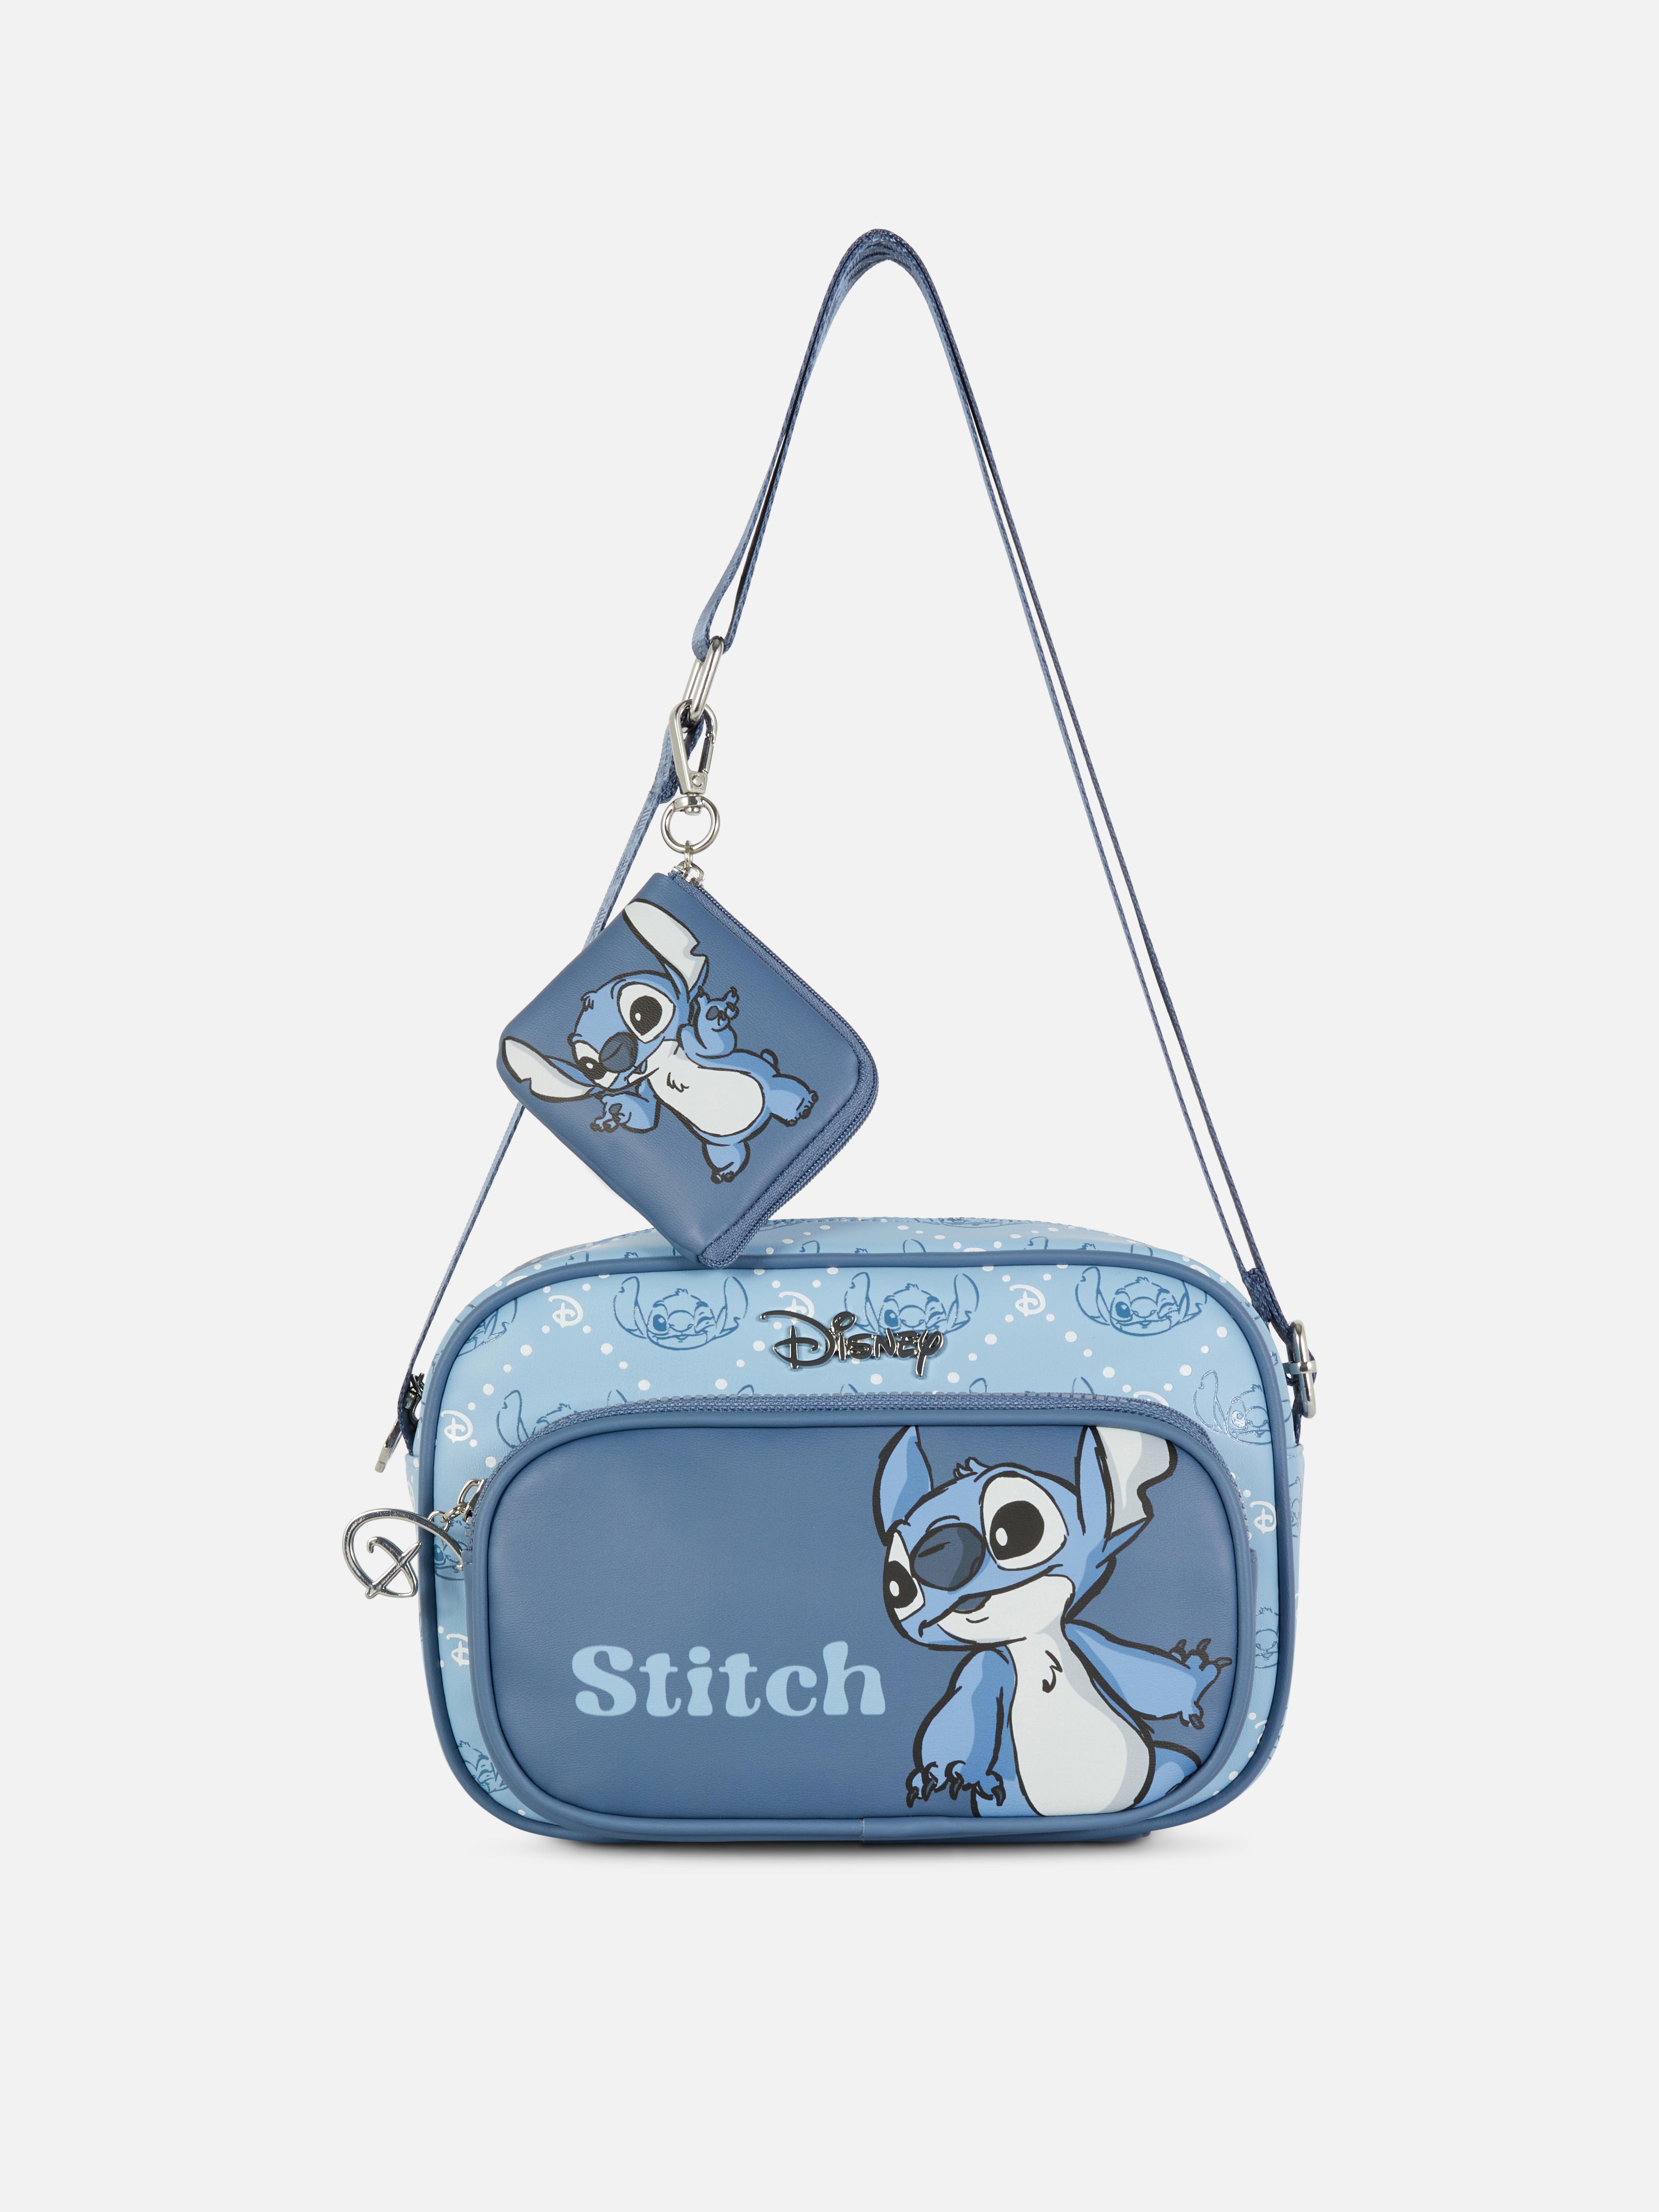 Disney’s Lilo & Stitch Monogram Crossbody Bag